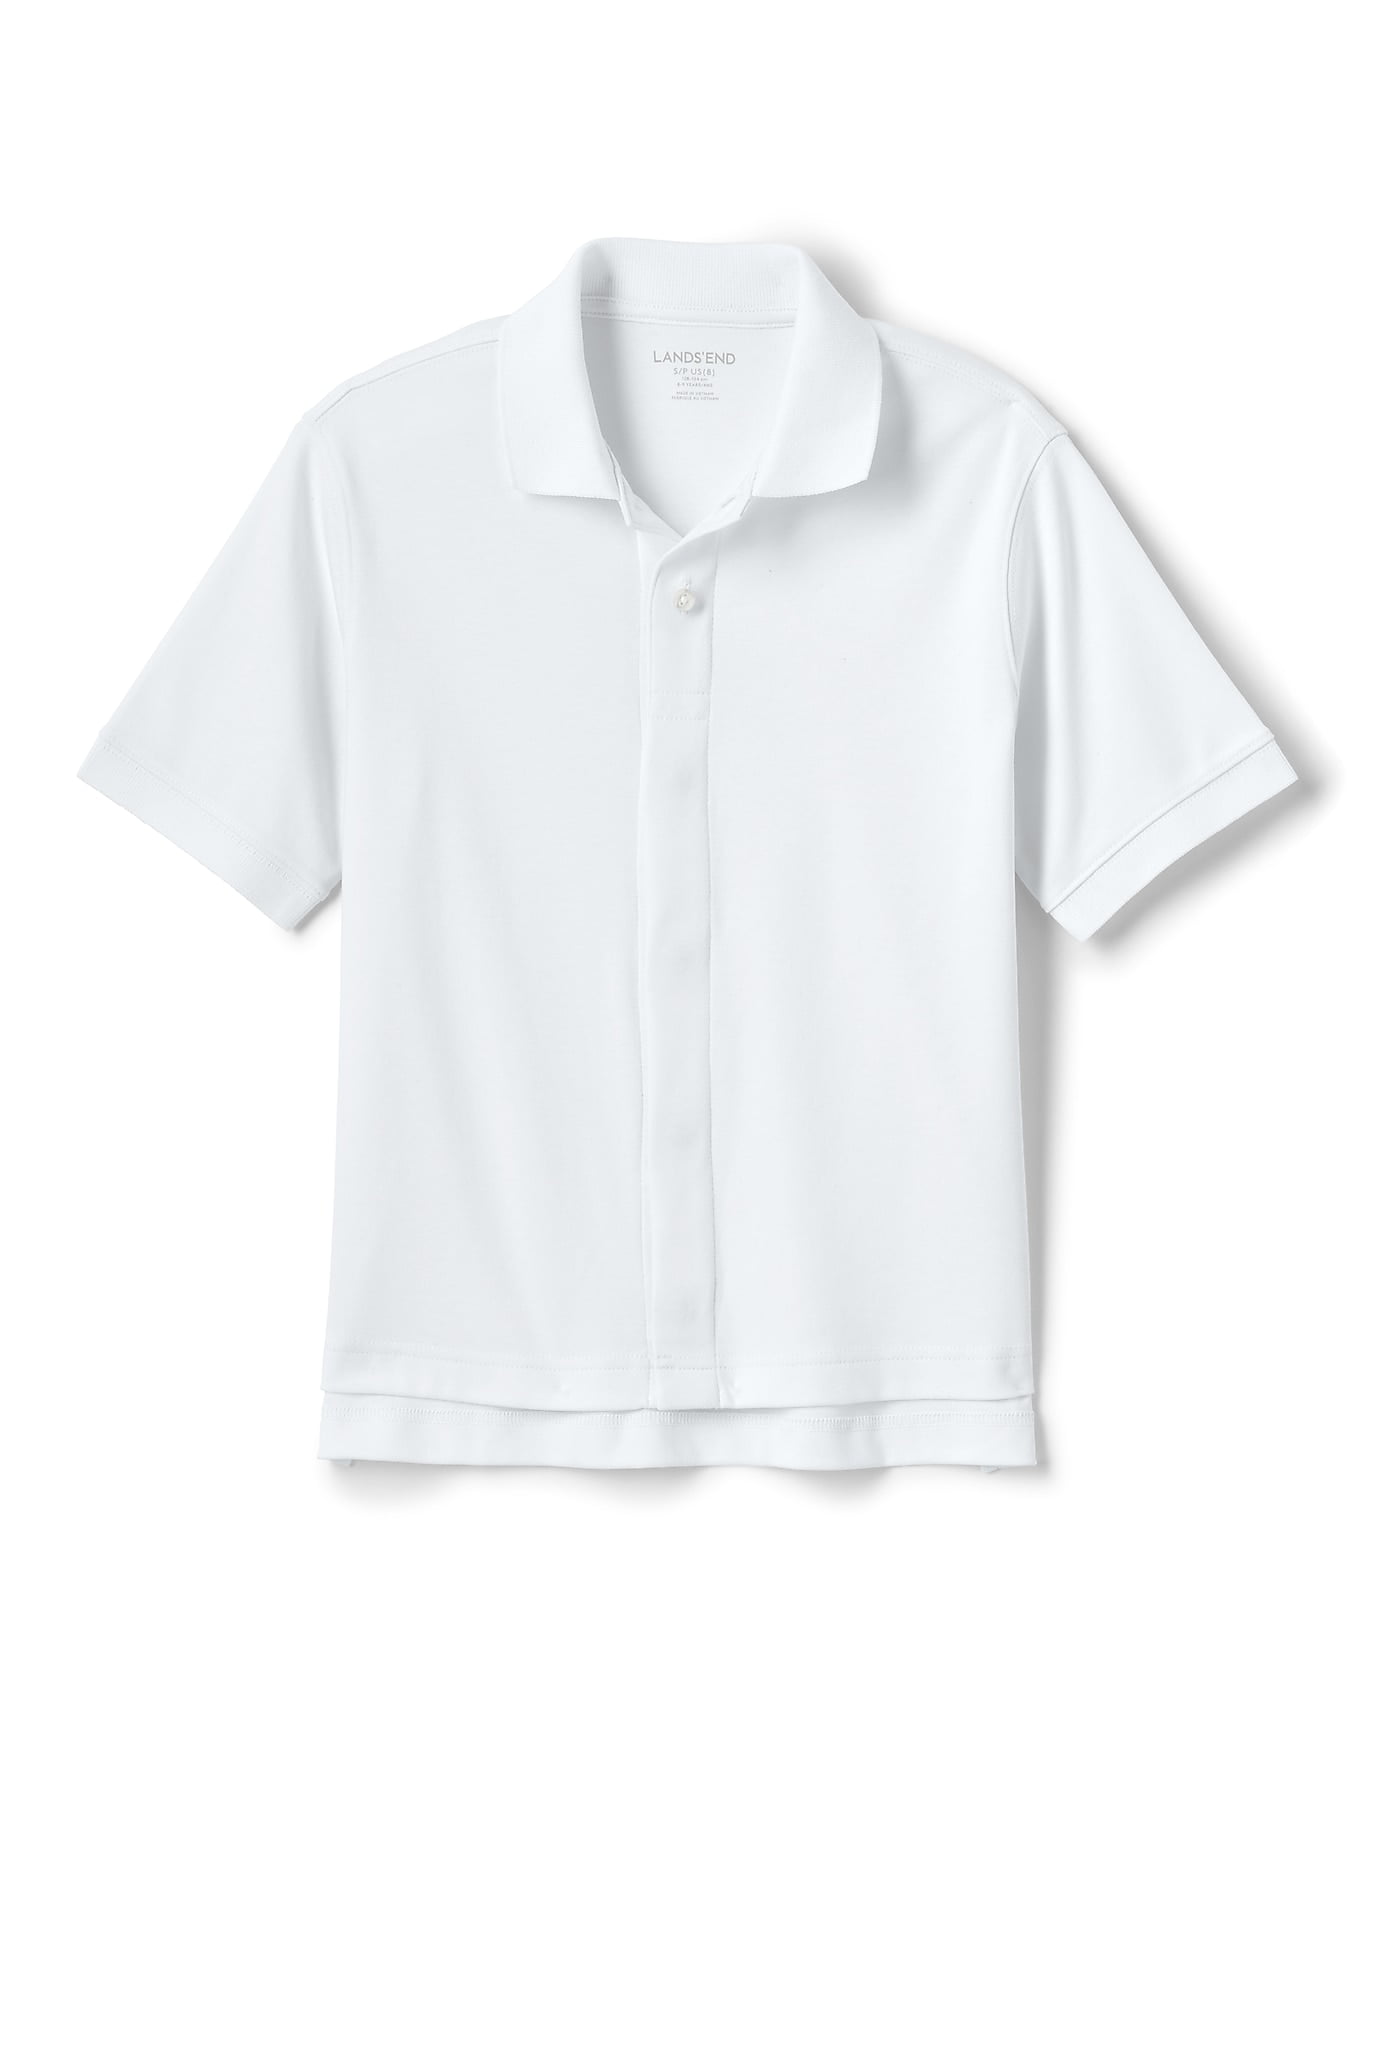 Lands End School Uniform Womens Adaptive Short Sleeve Interlock Polo Shirt